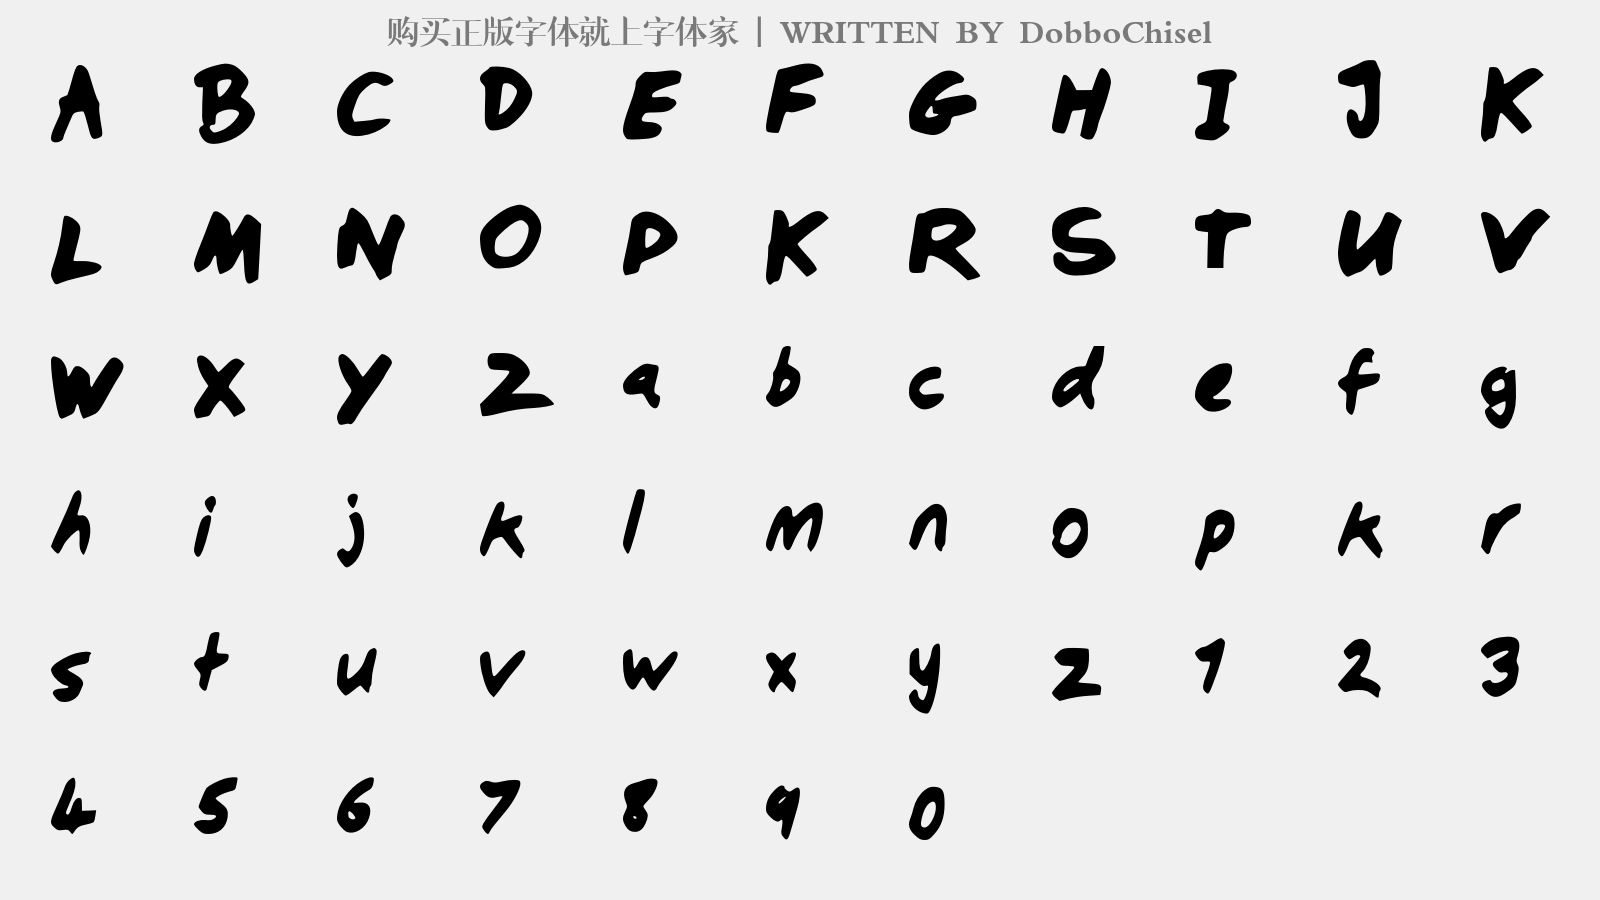 DobboChisel - 大写字母/小写字母/数字